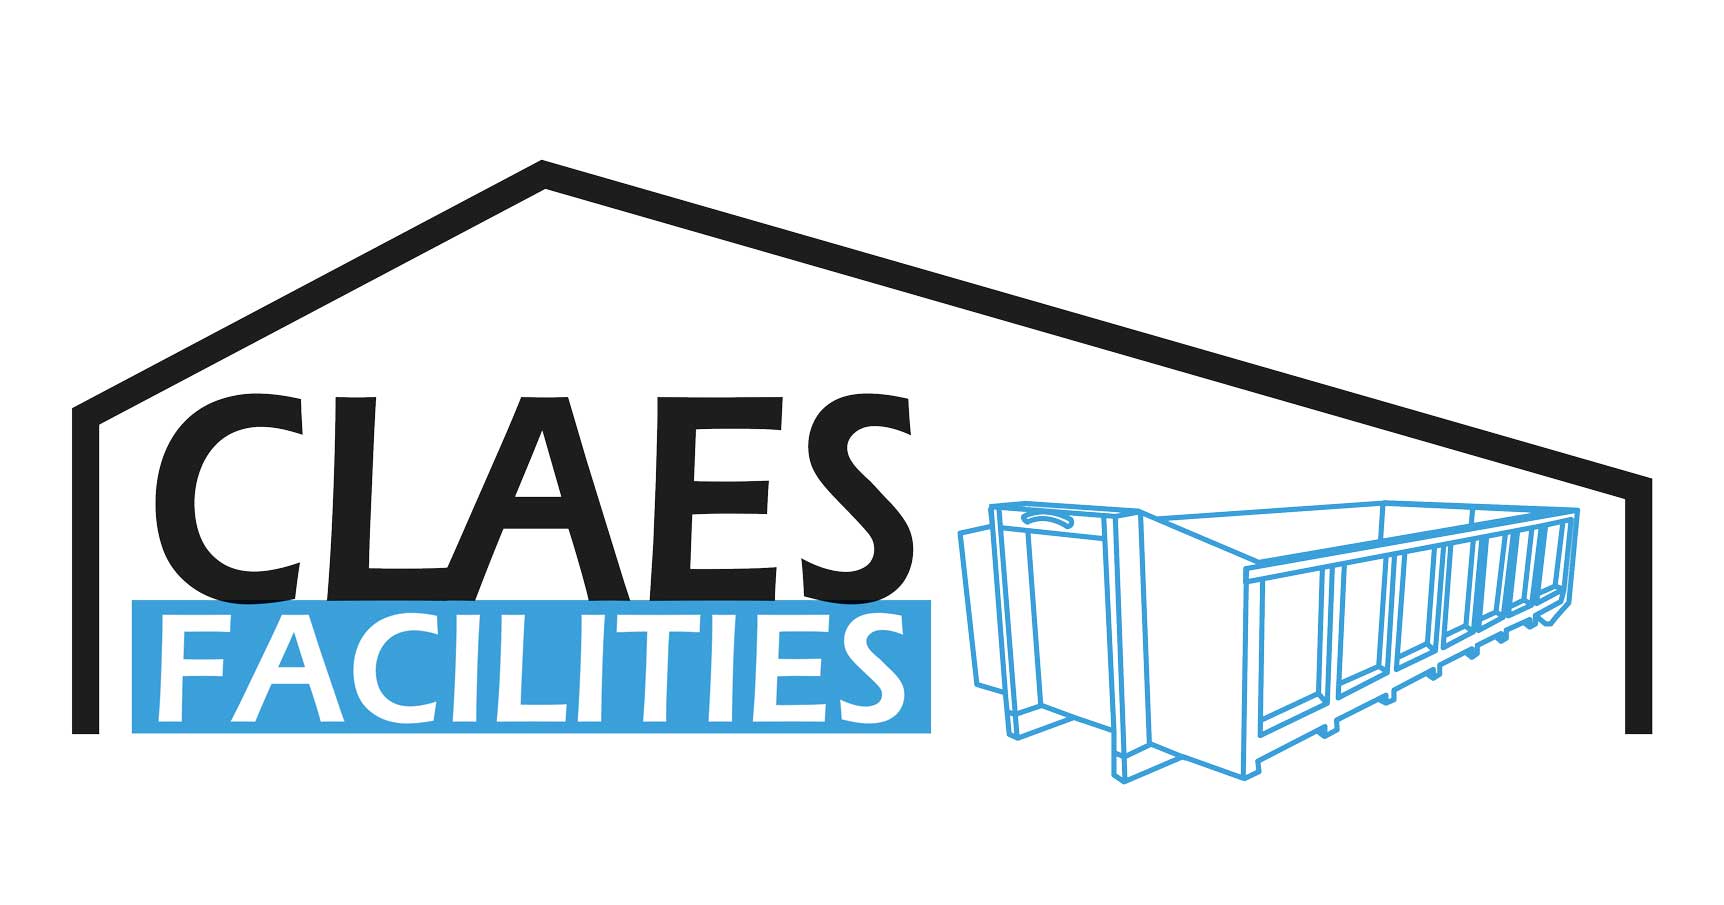 Claes facilities